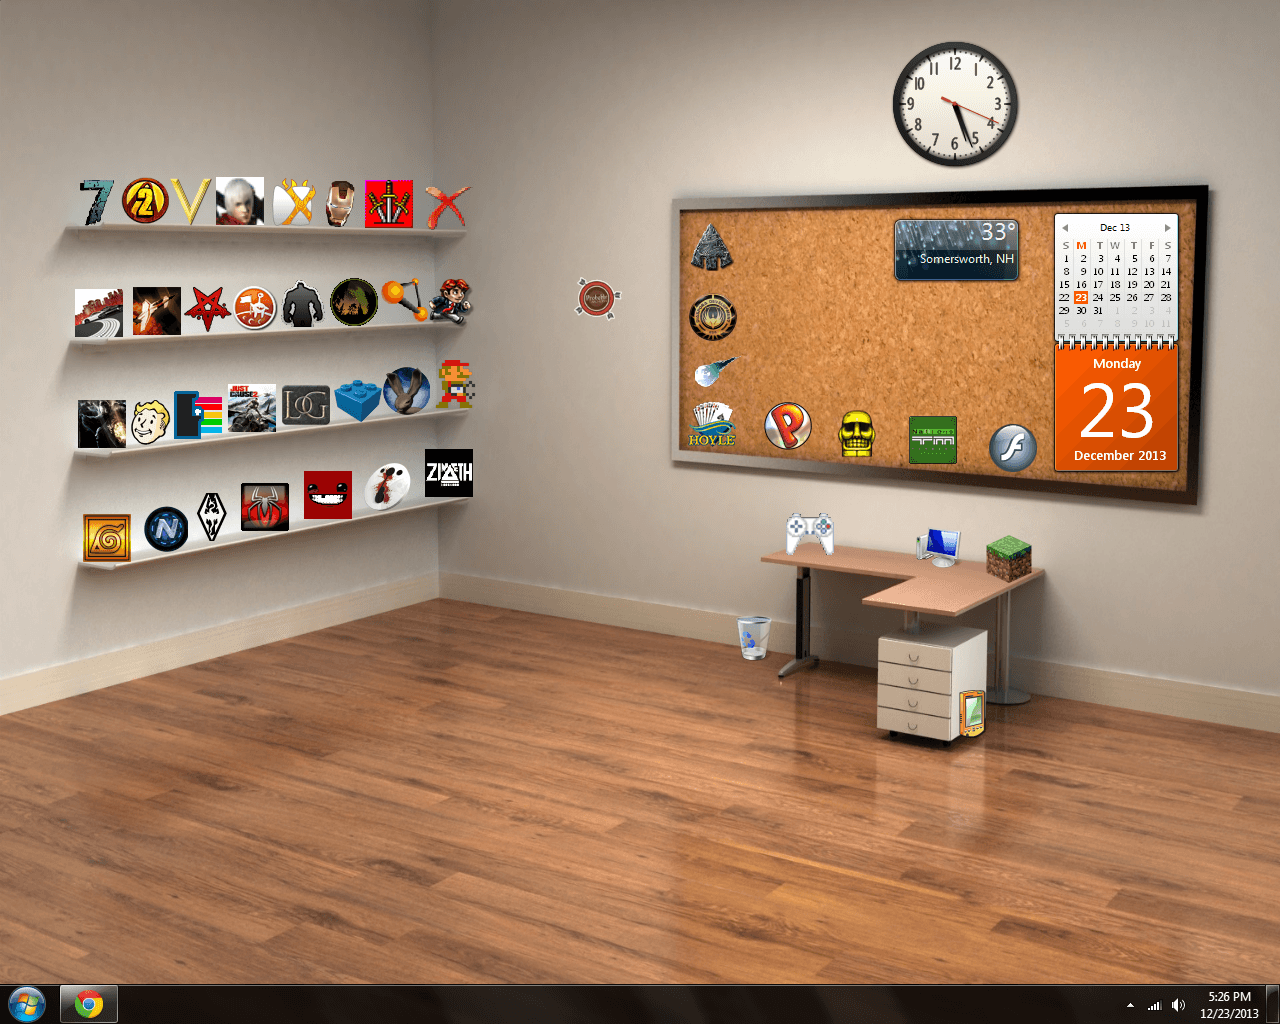 3D Desktop Background